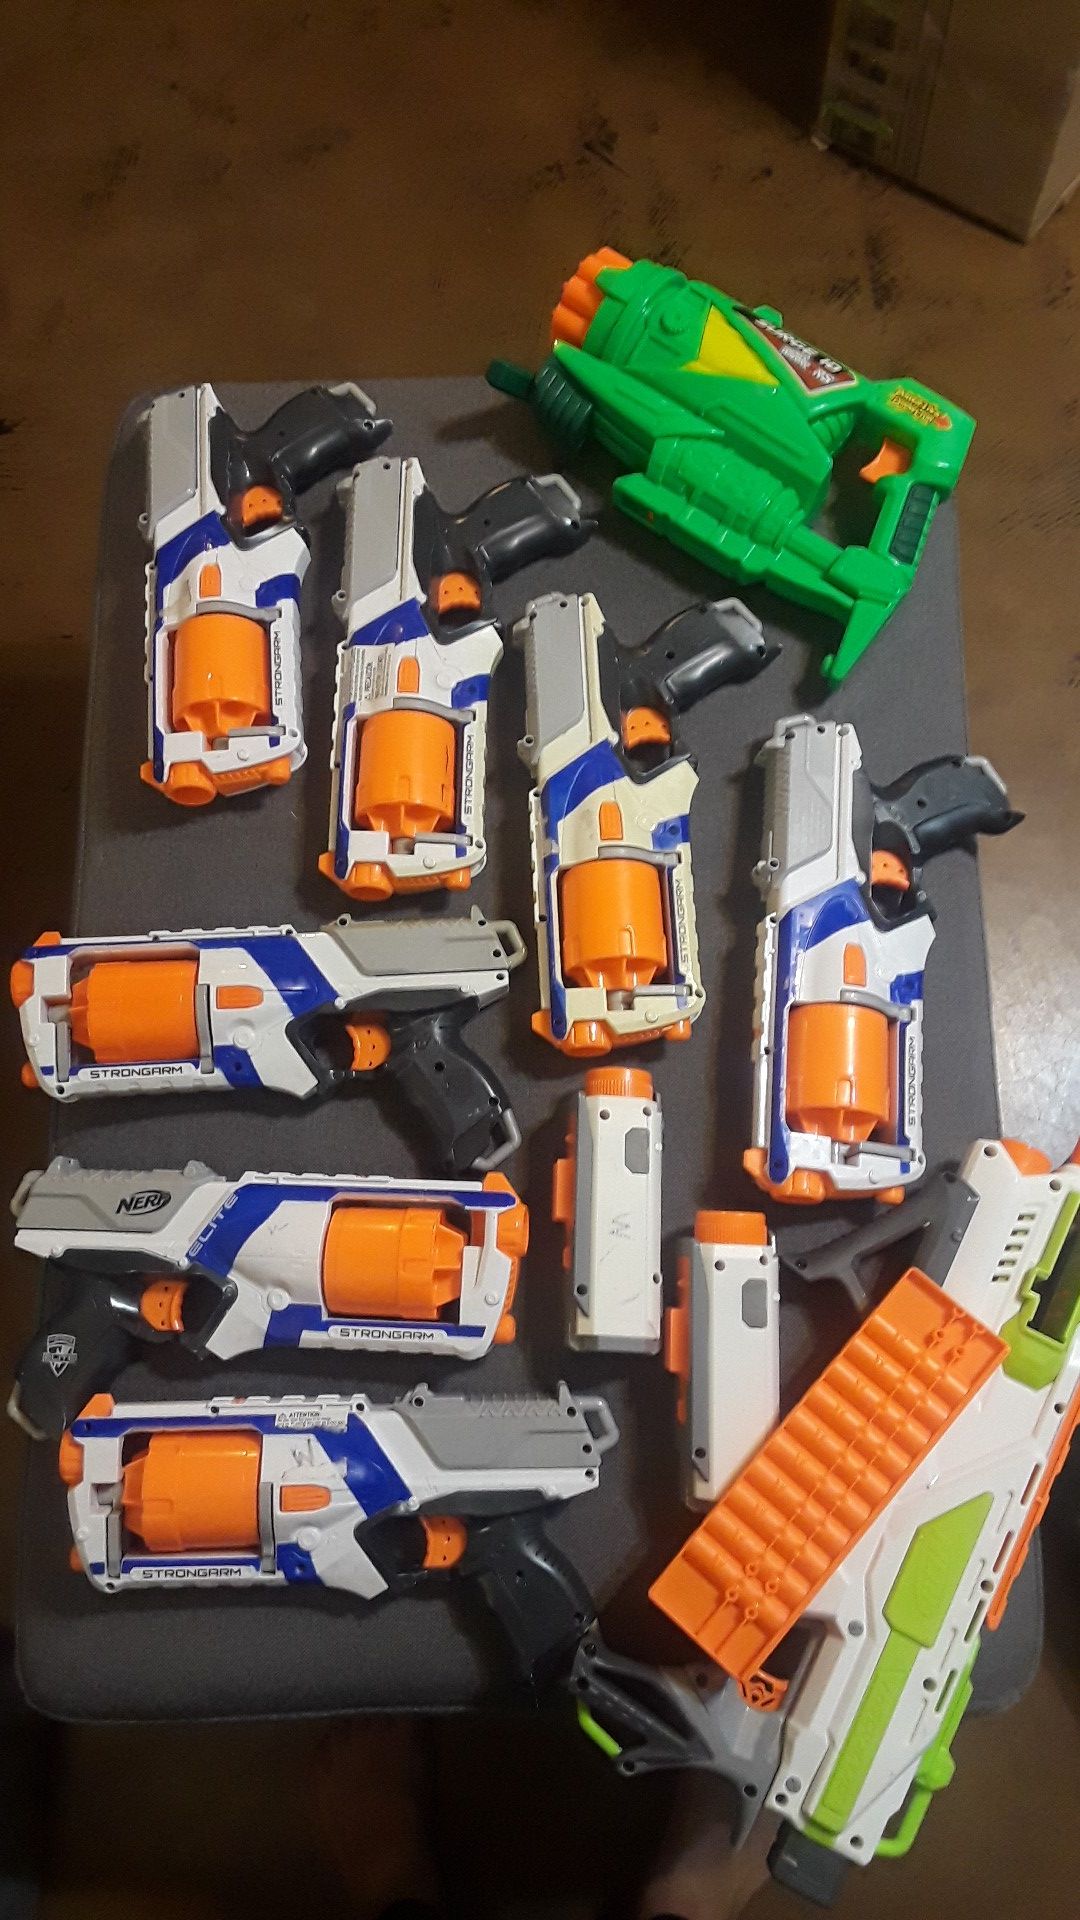 9 Nerf guns and camera